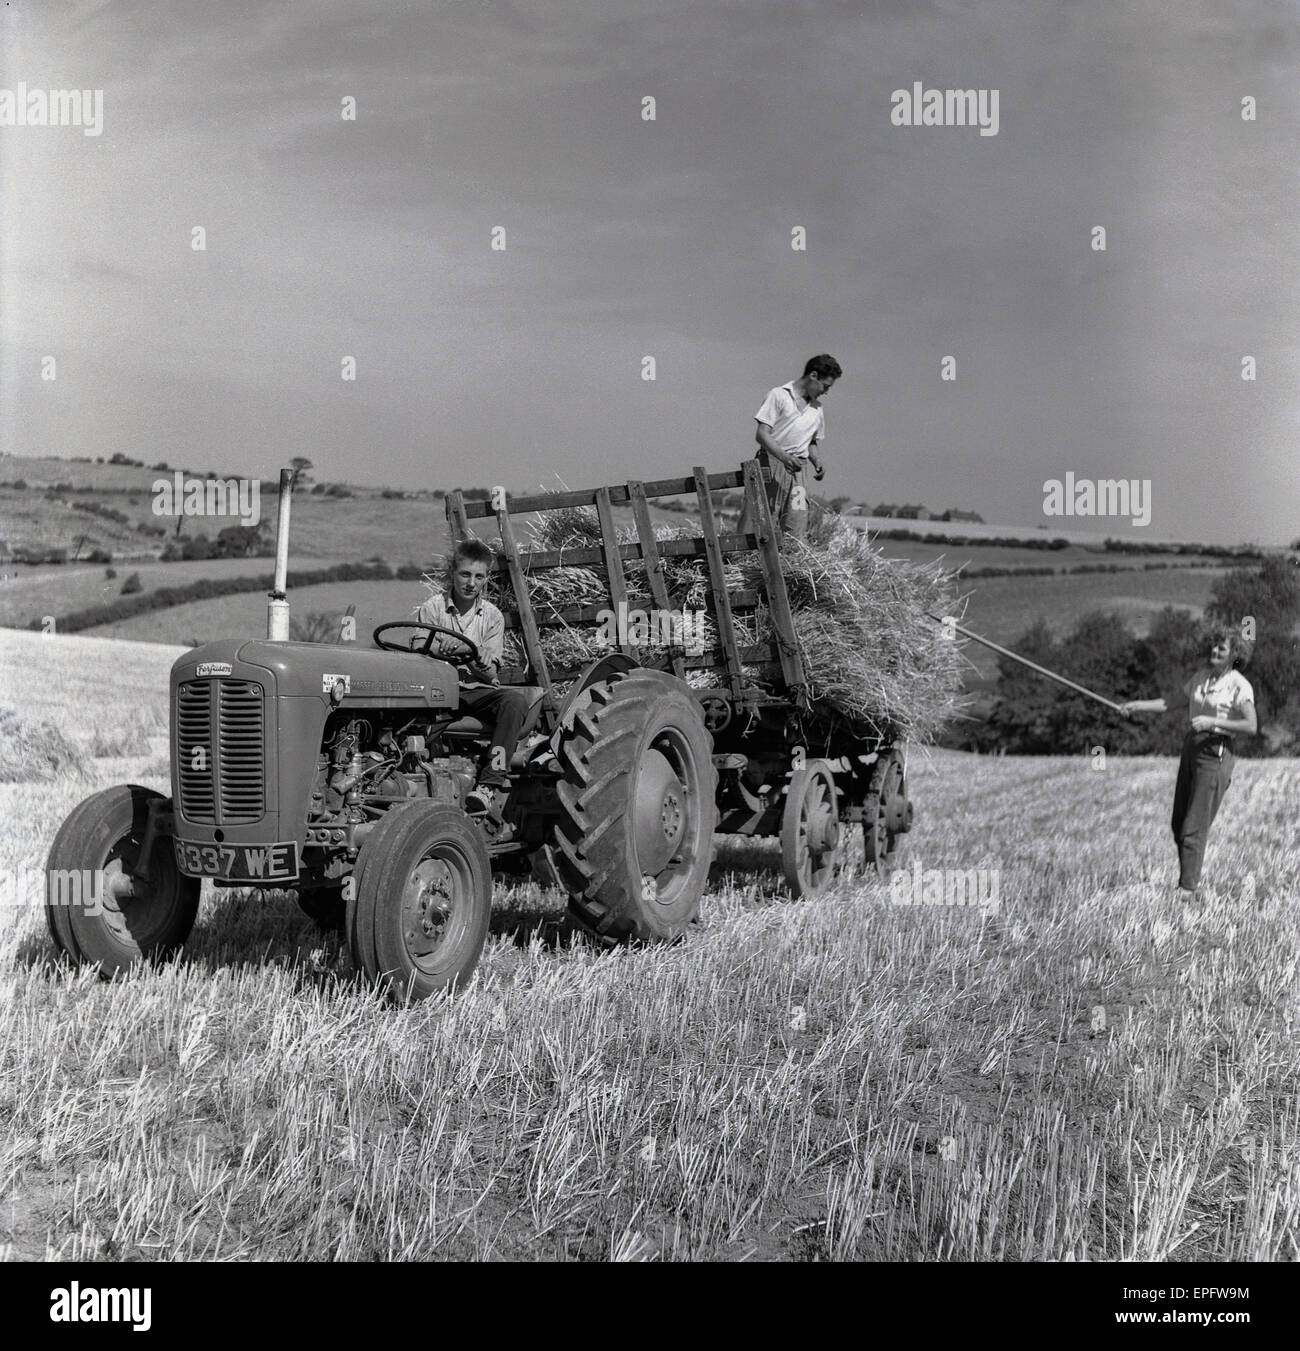 1950s Farm Equipment